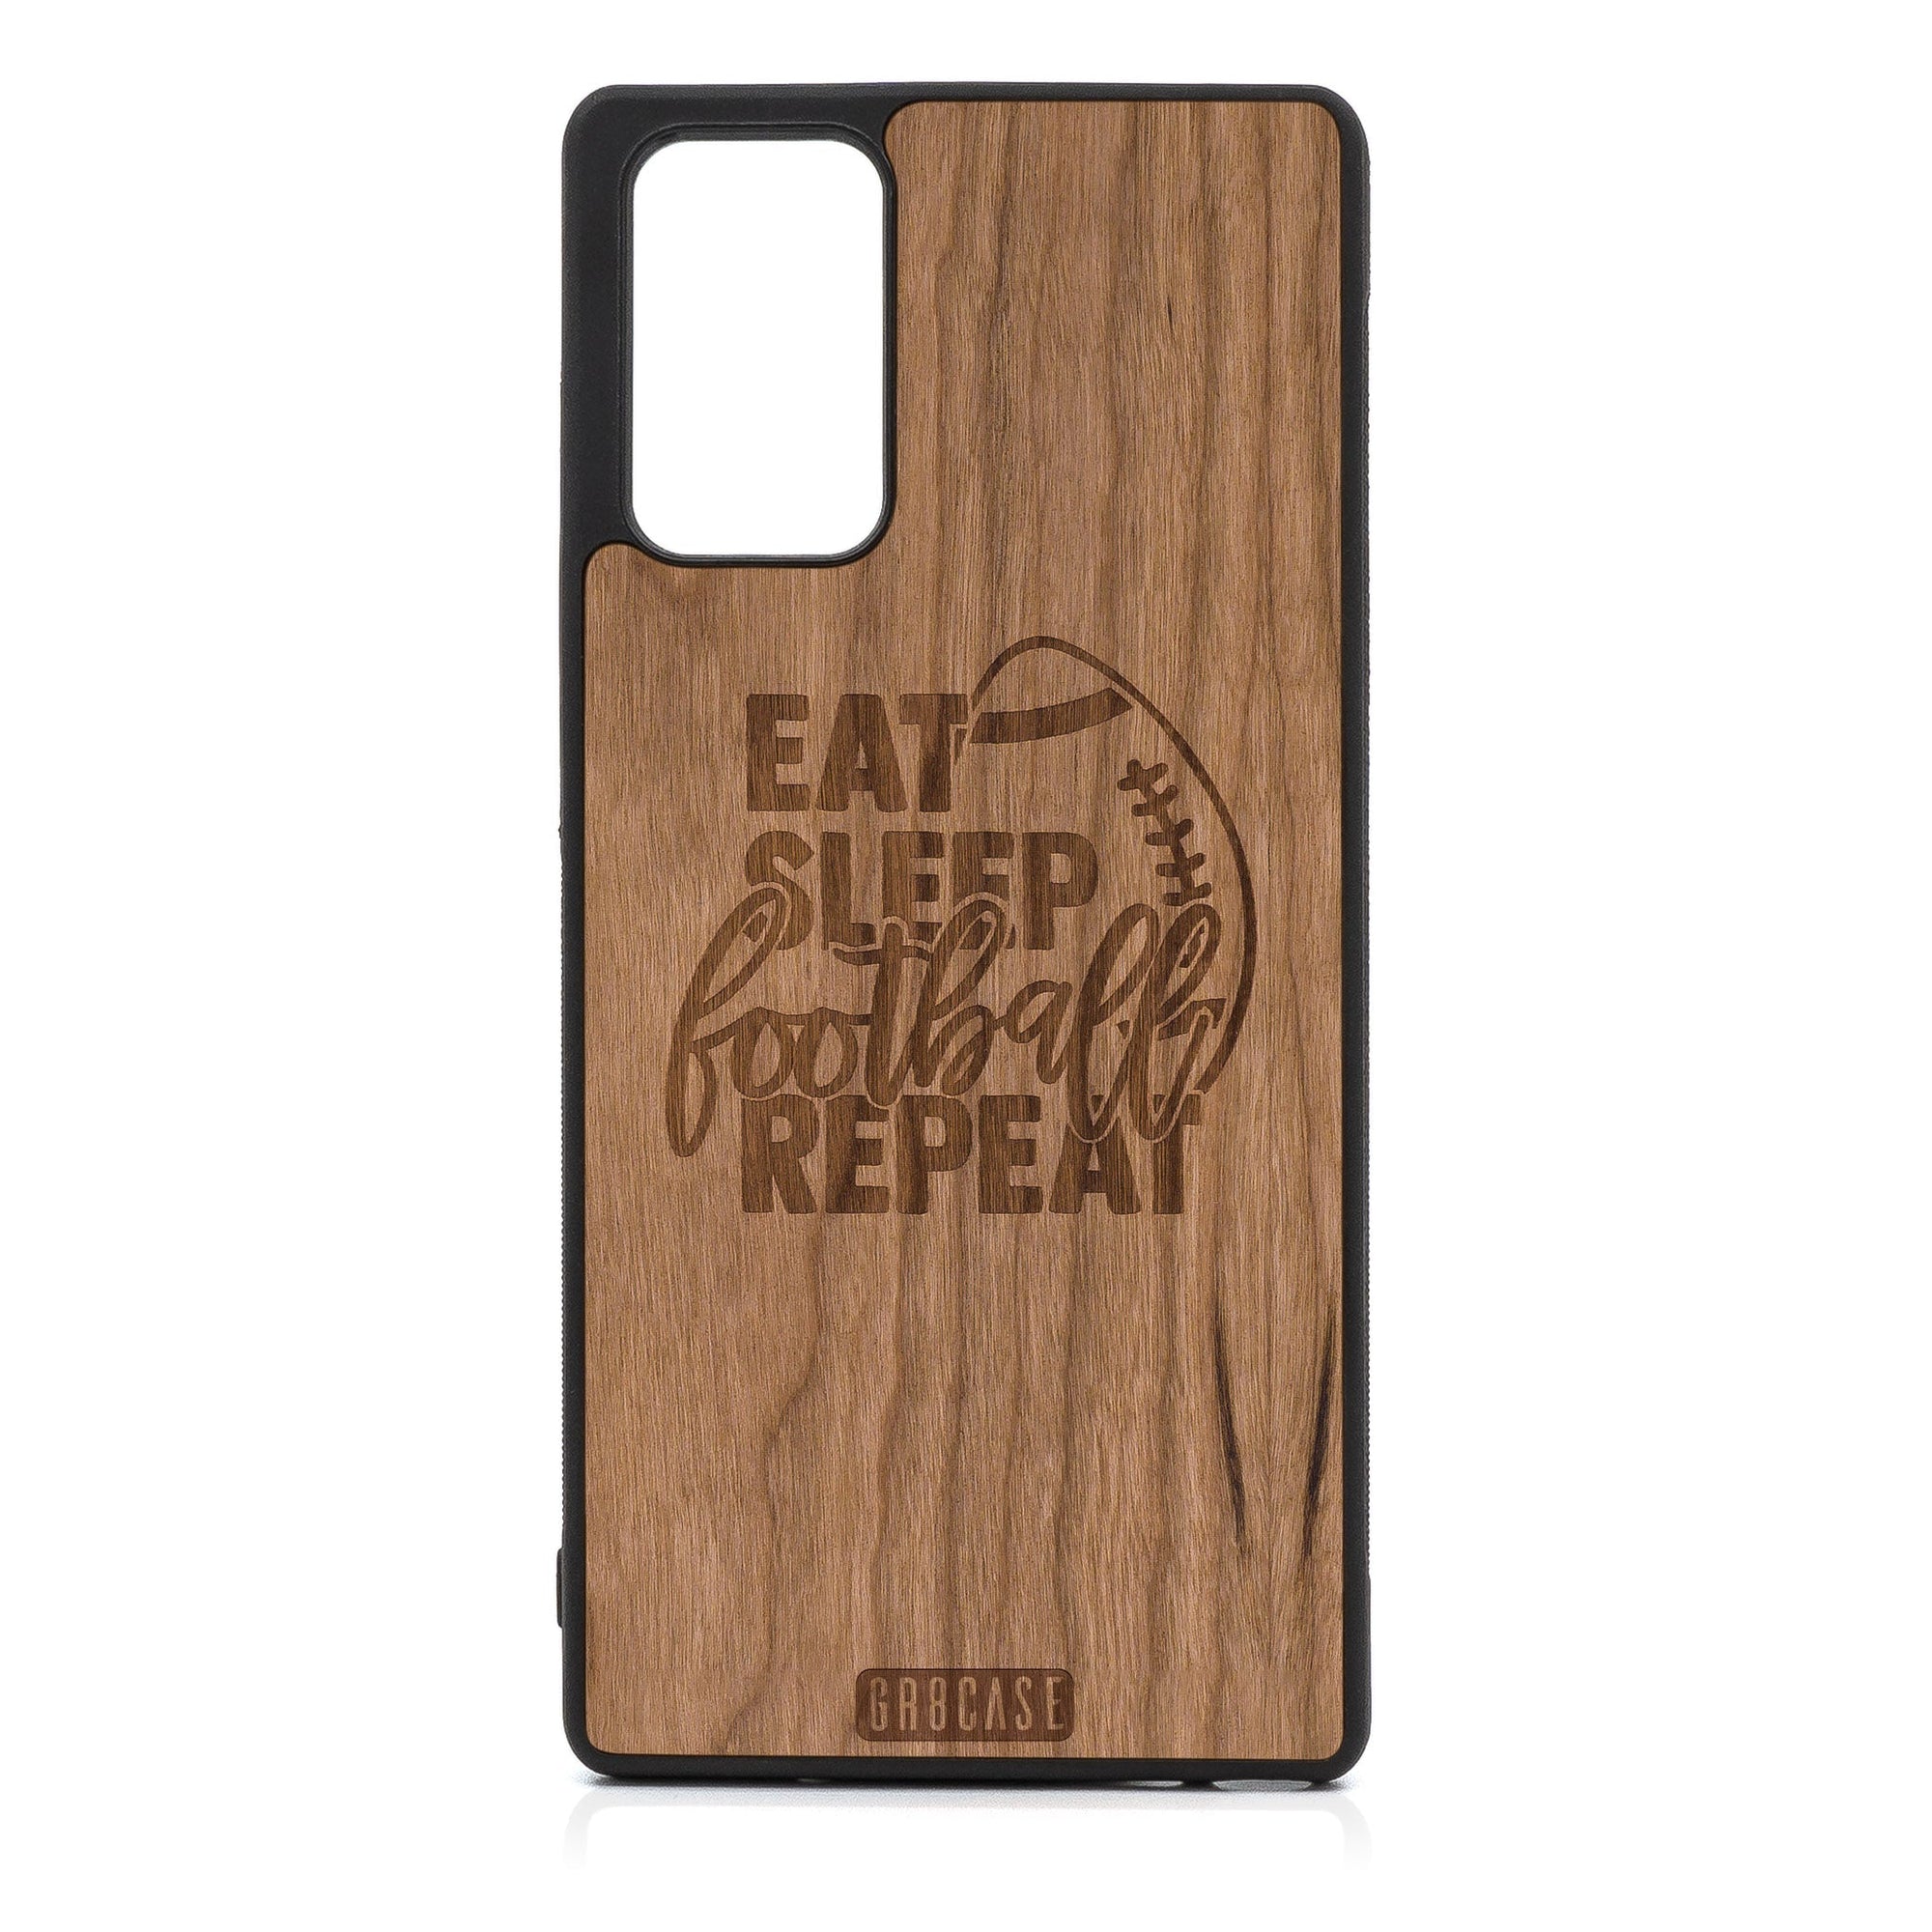 Eat Sleep Softball Repeat Design Wood Case For Samsung Galaxy A72 5G